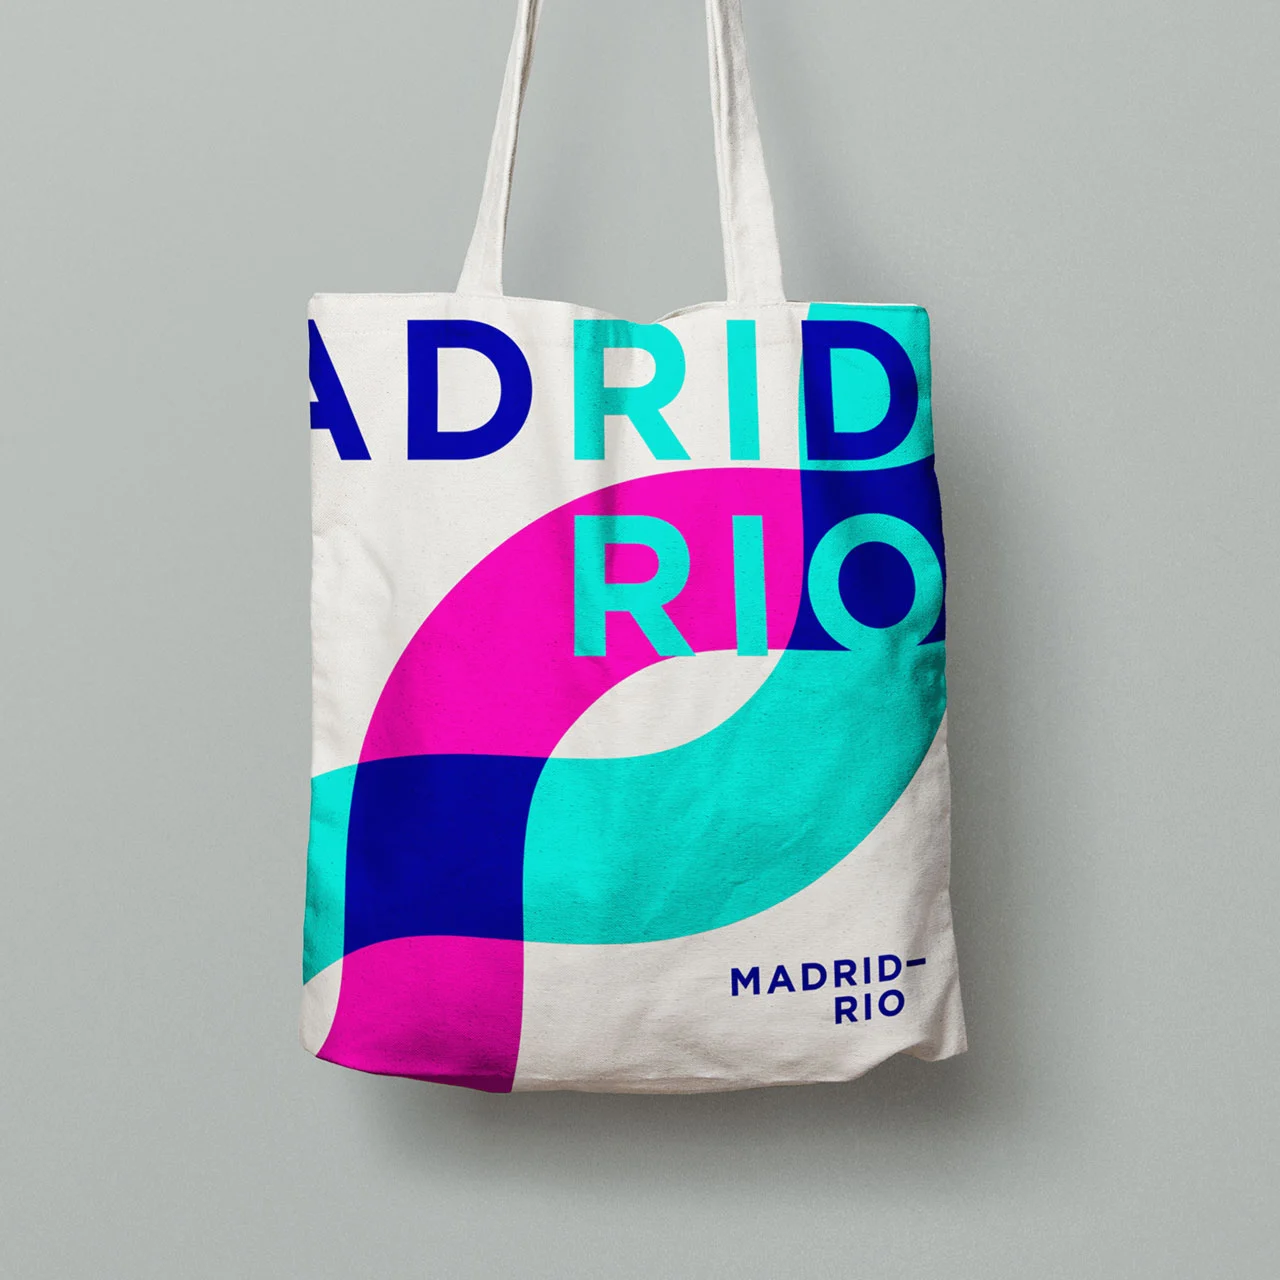 Logotipo MADRID-RIO